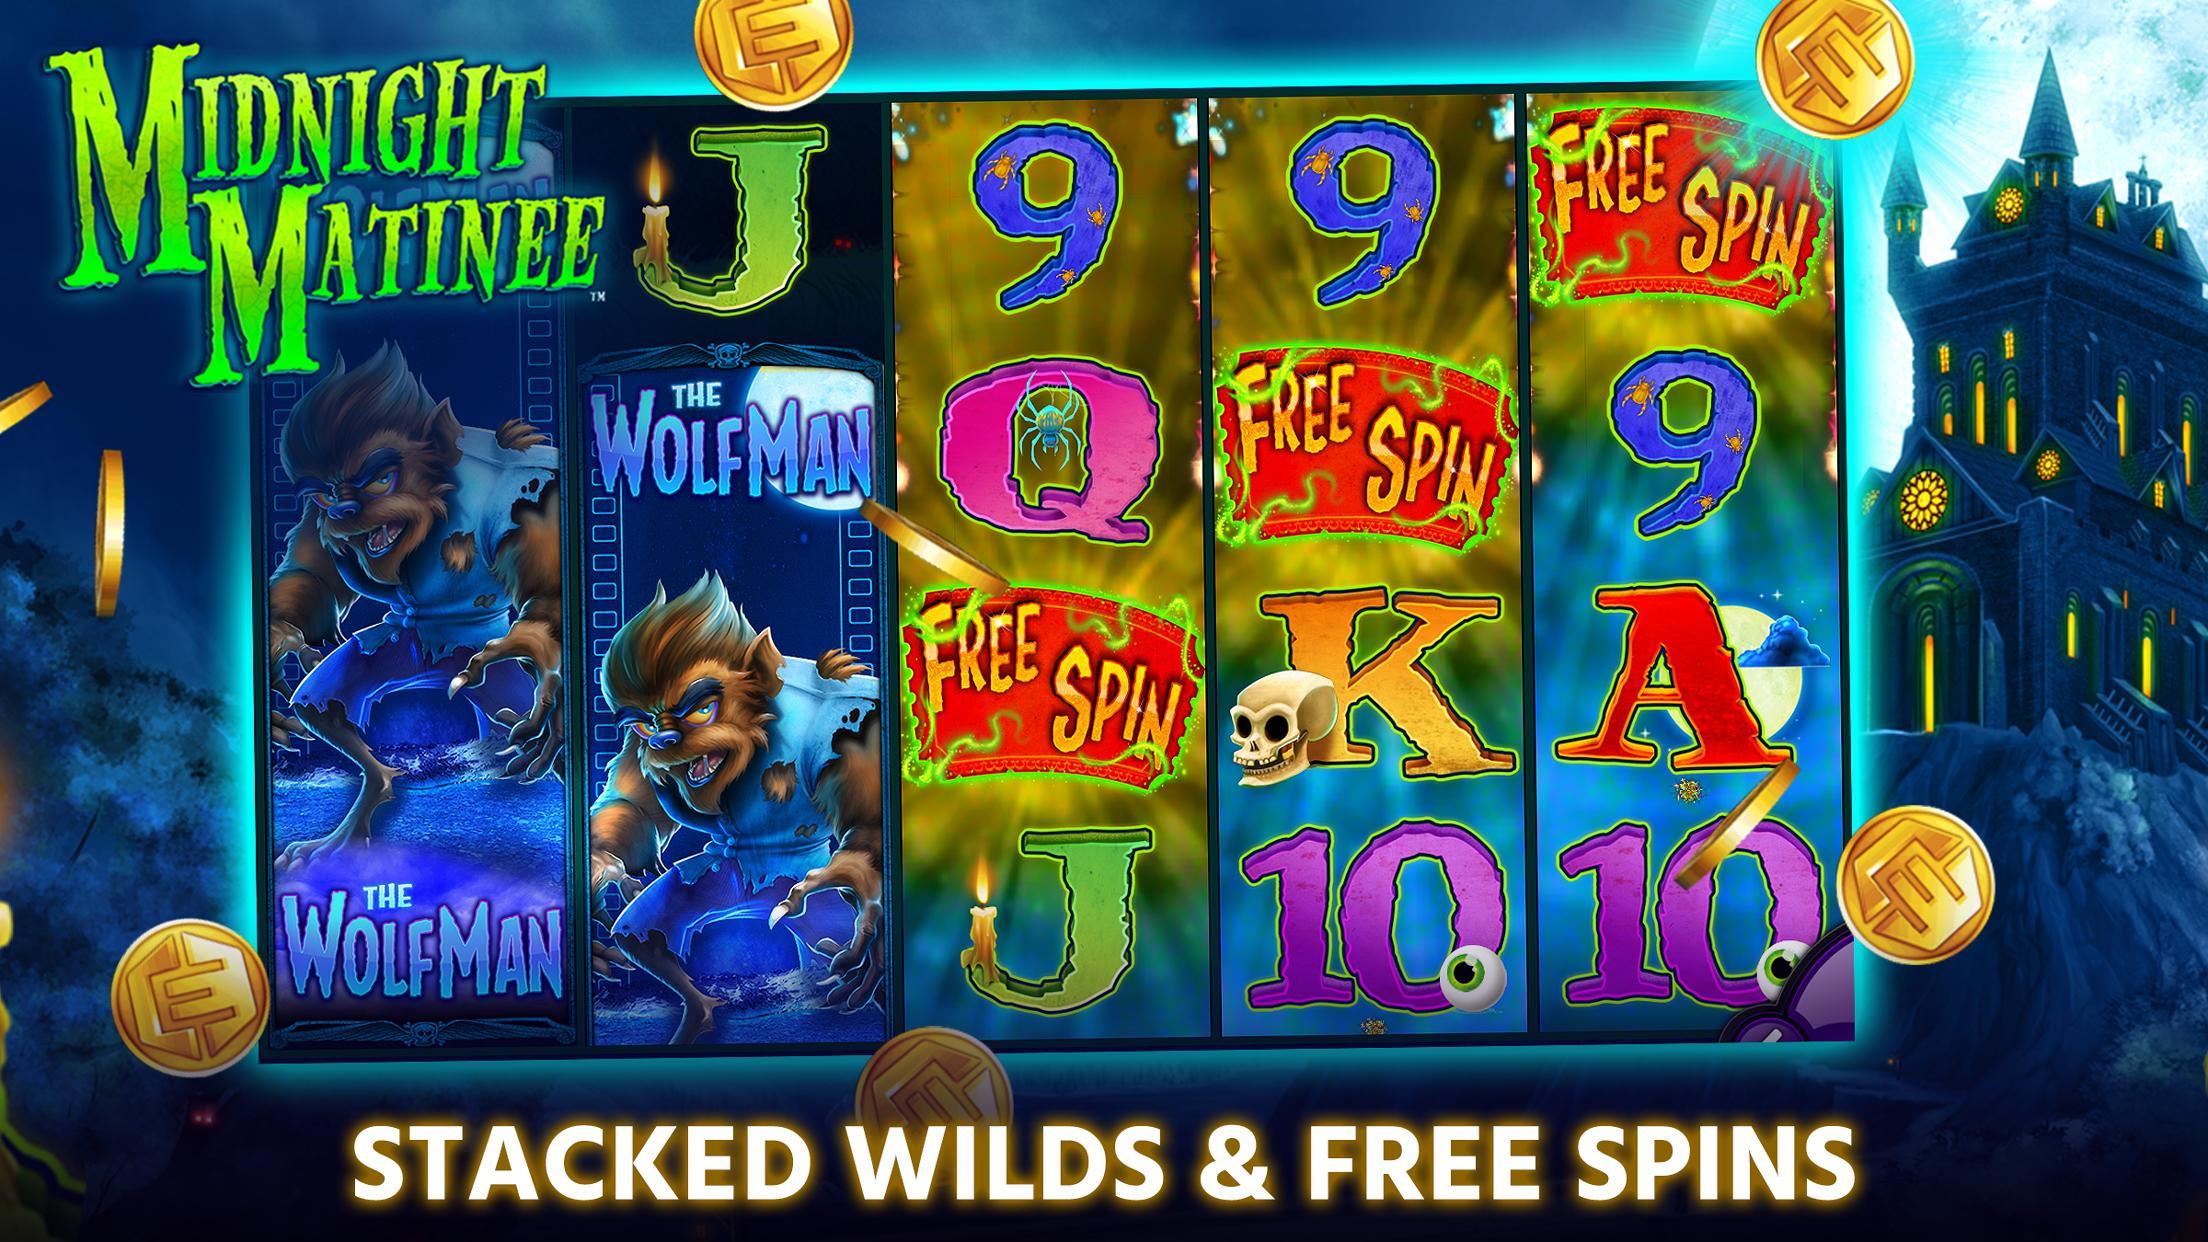 Fantasy Springs Resort Casino - Platform To Play Games For Free!